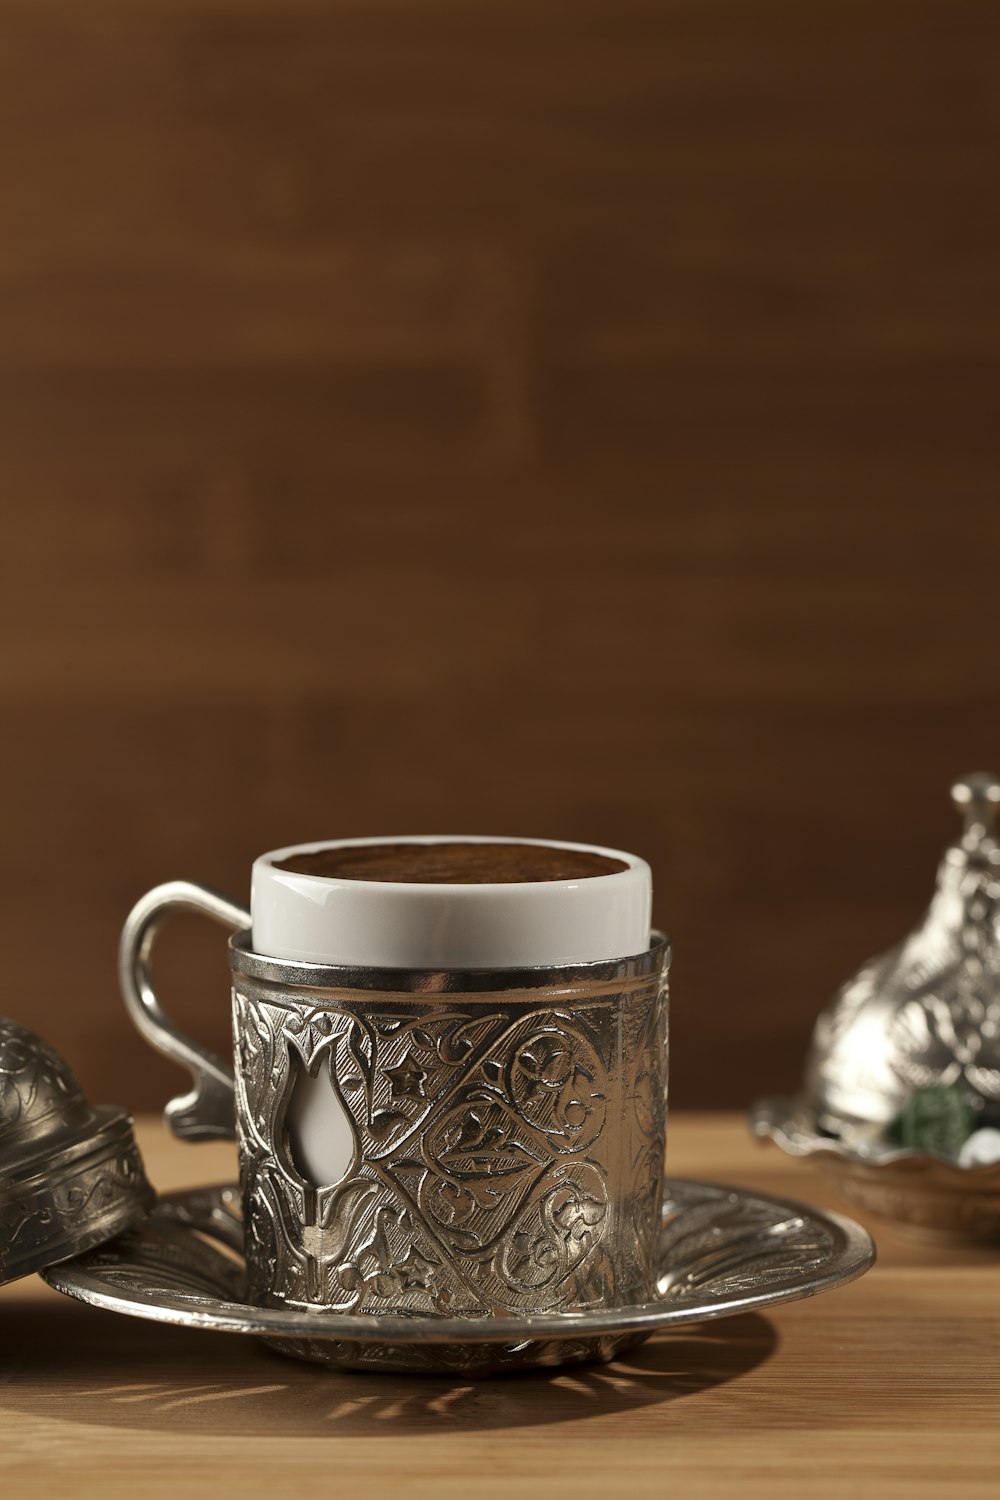 white and black floral ceramic mug on table